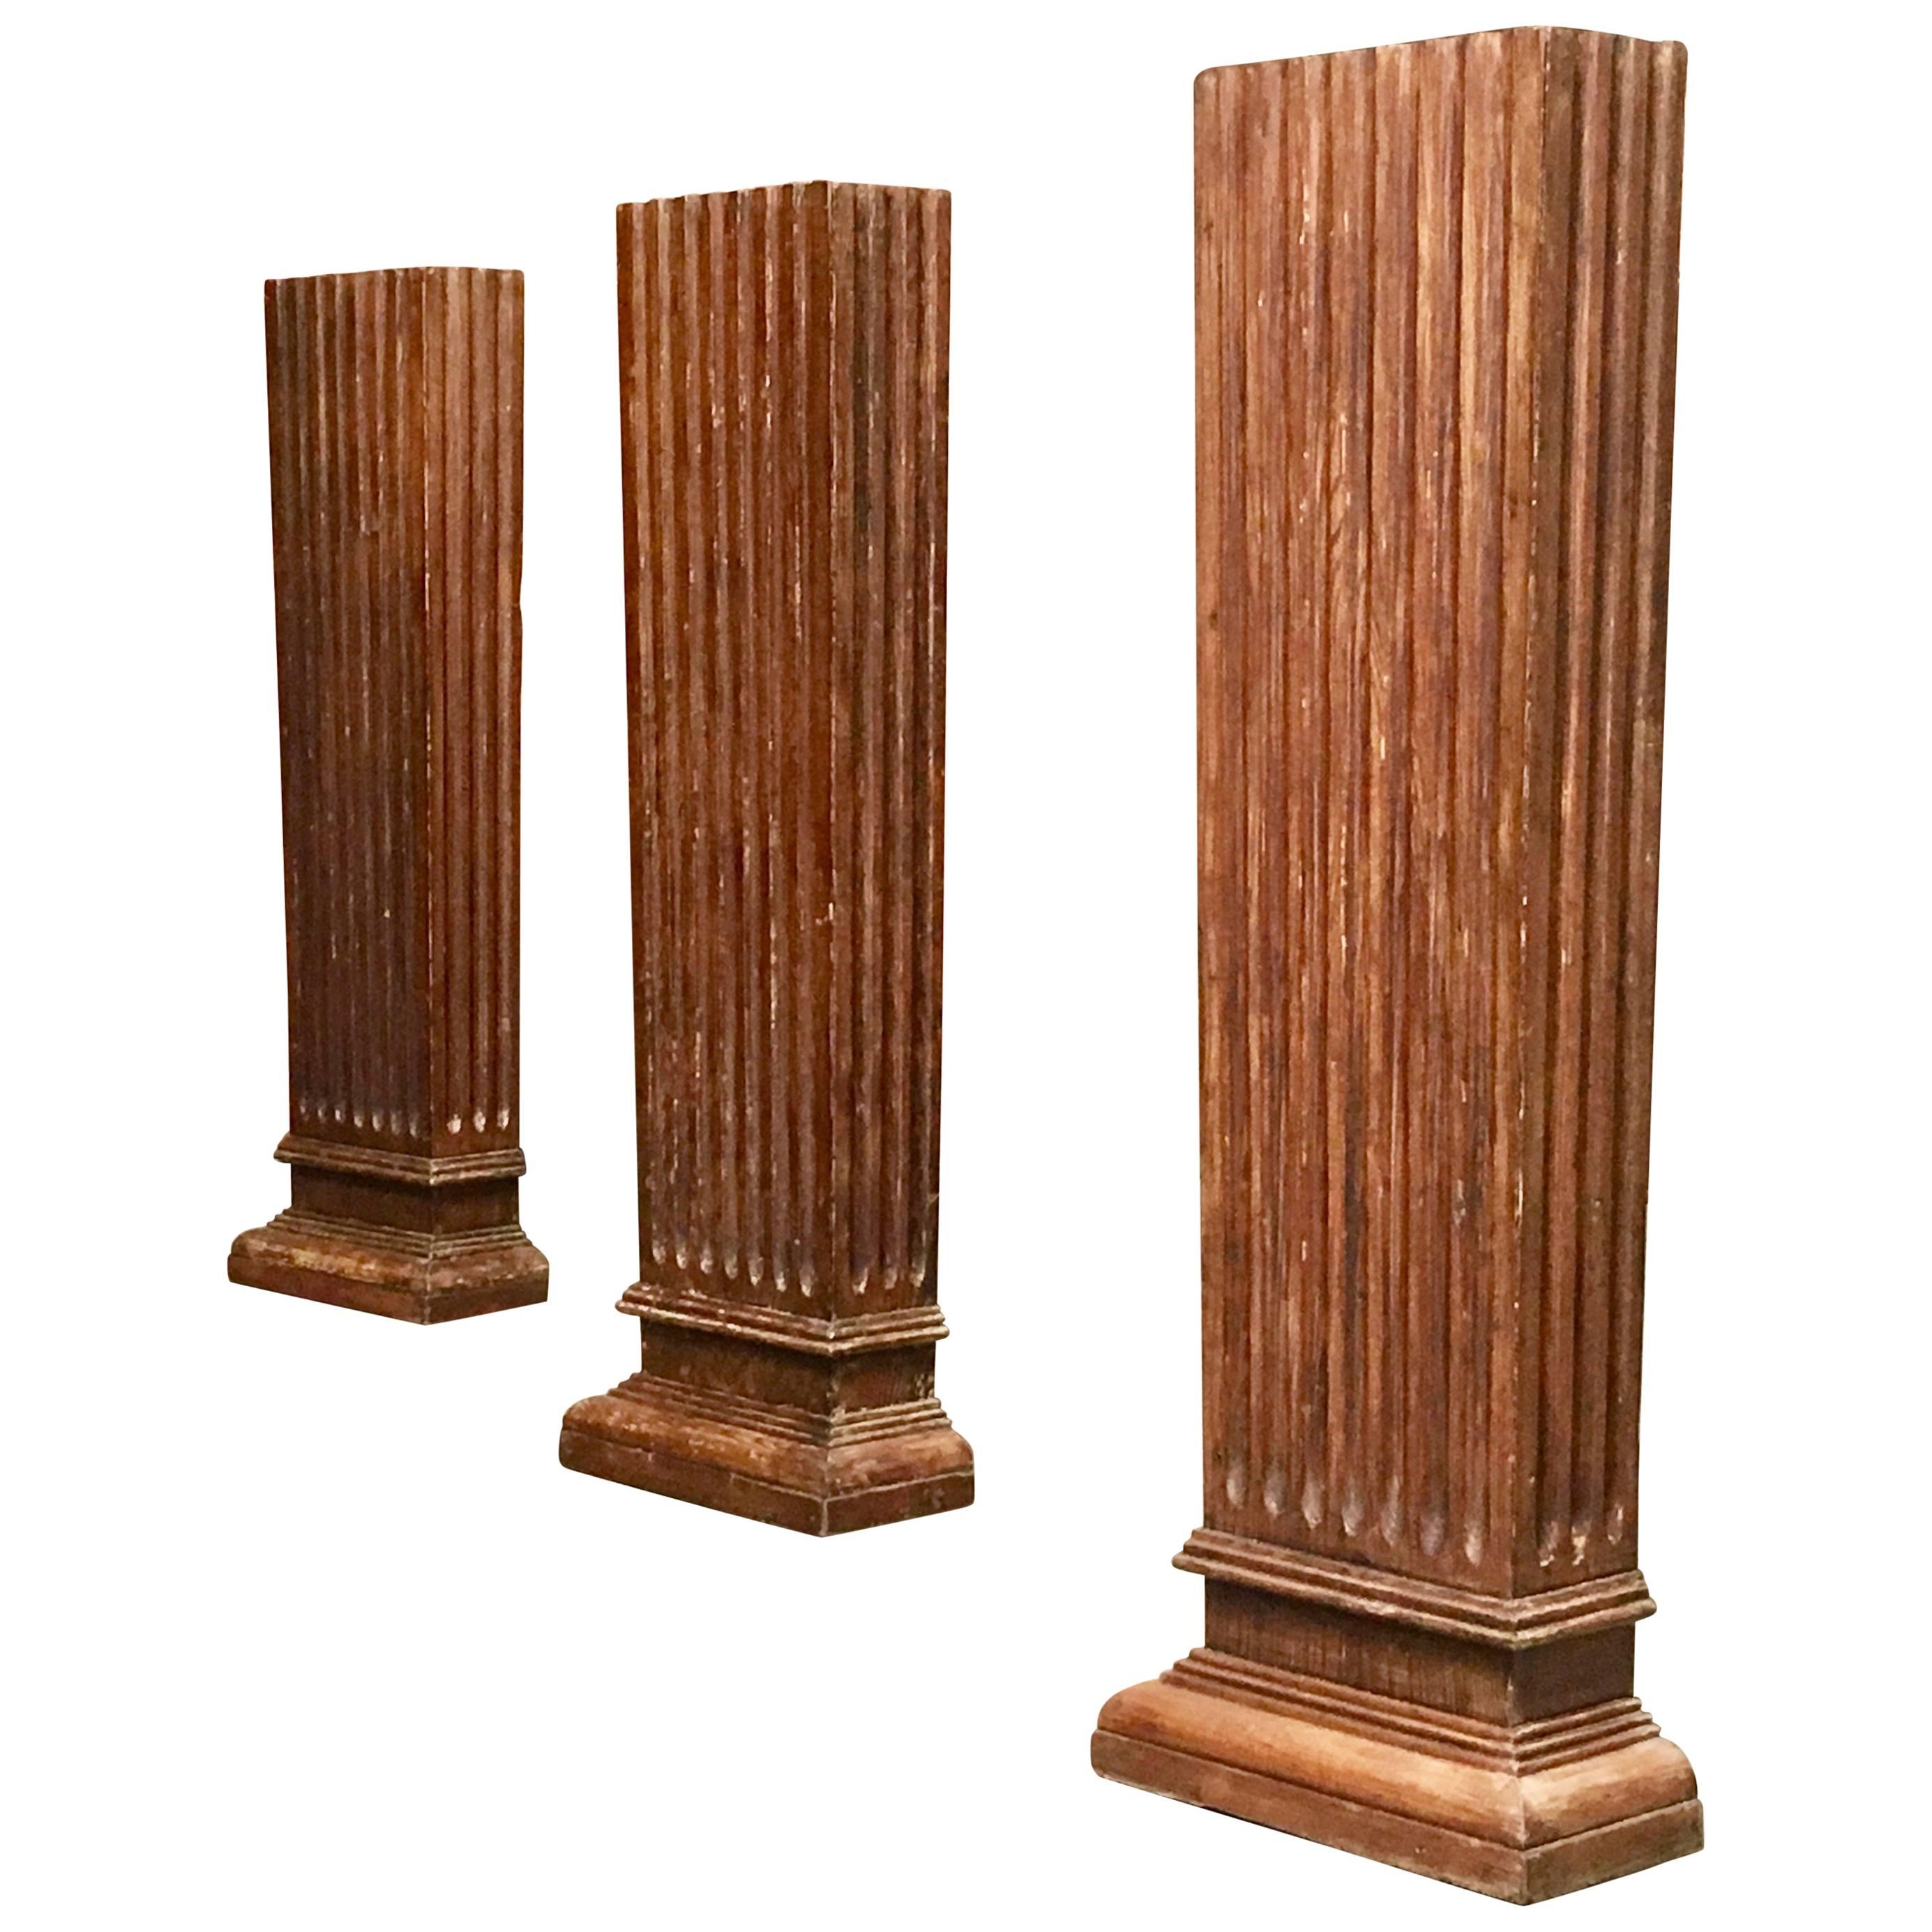 Set of Three Antique Wood Columns